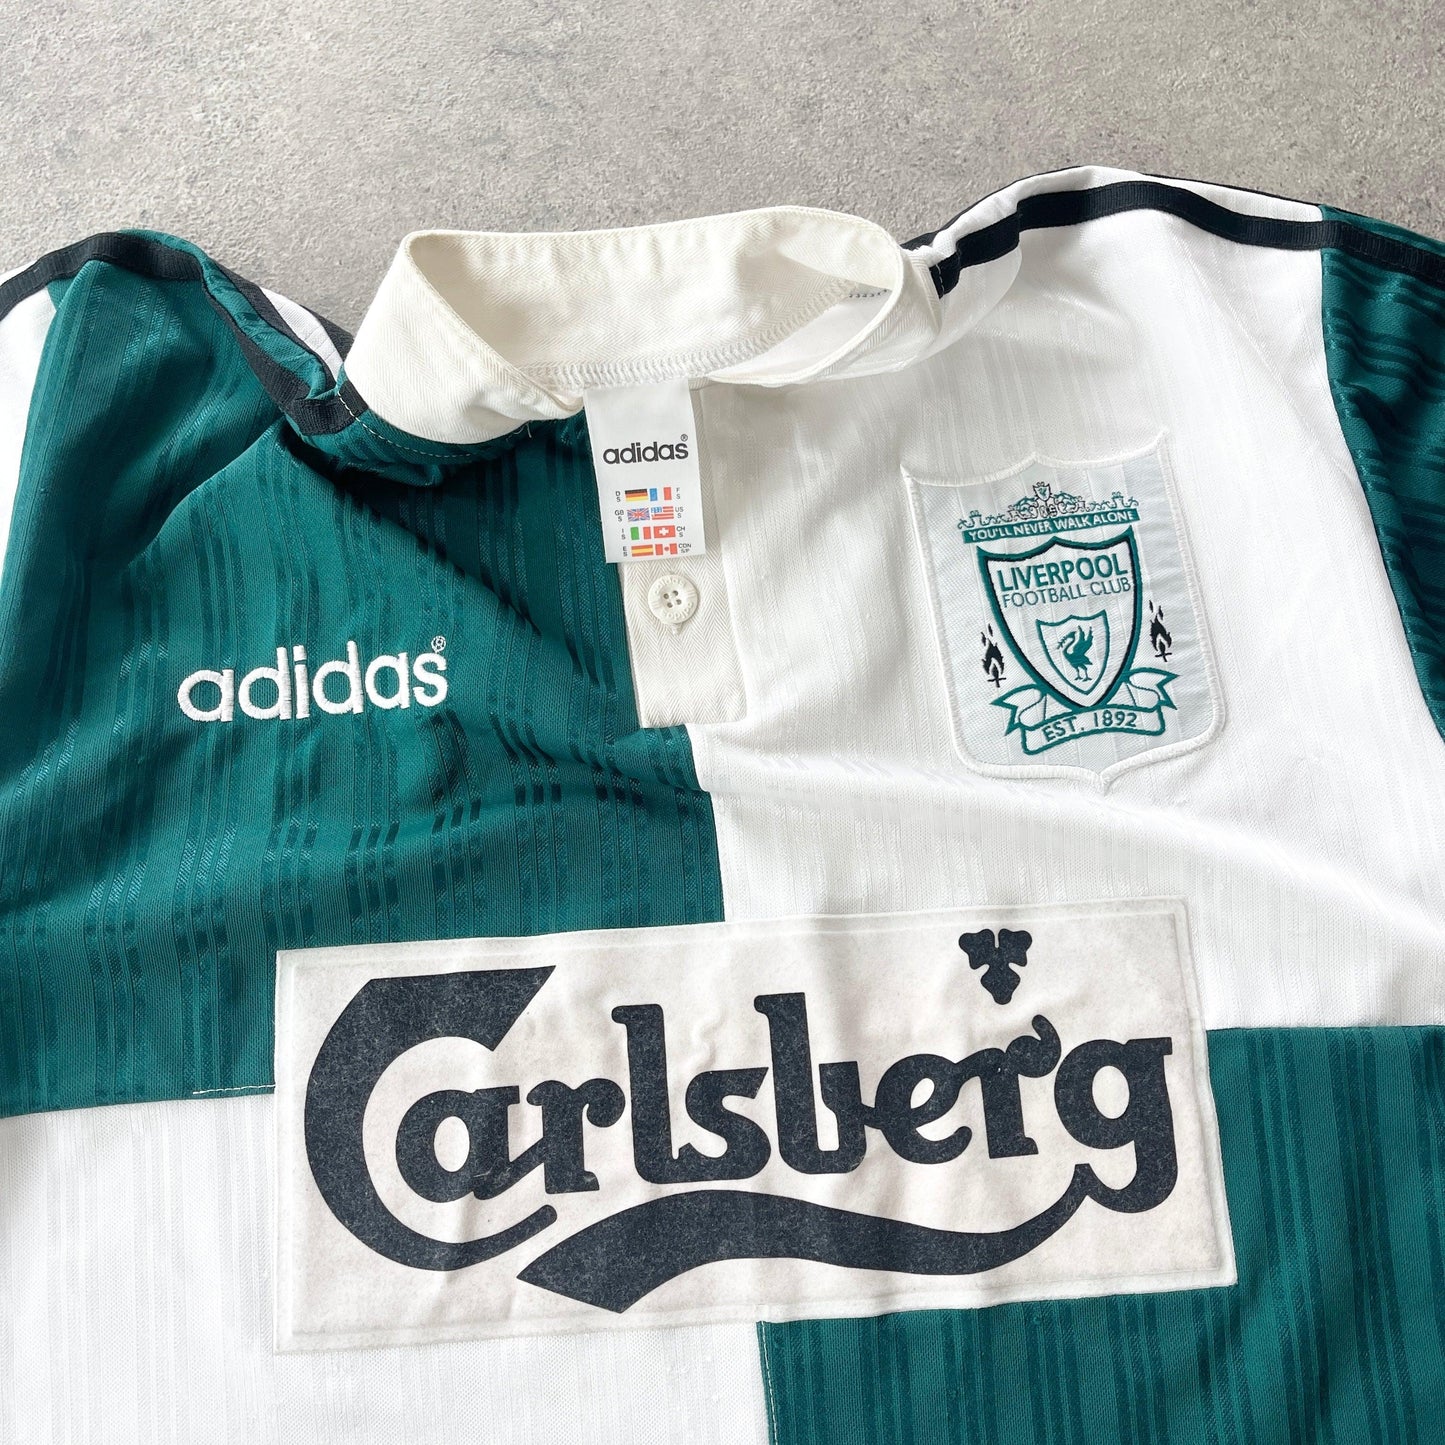 Liverpool x Adidas 1995/96 football away shirt (S) - Known Source